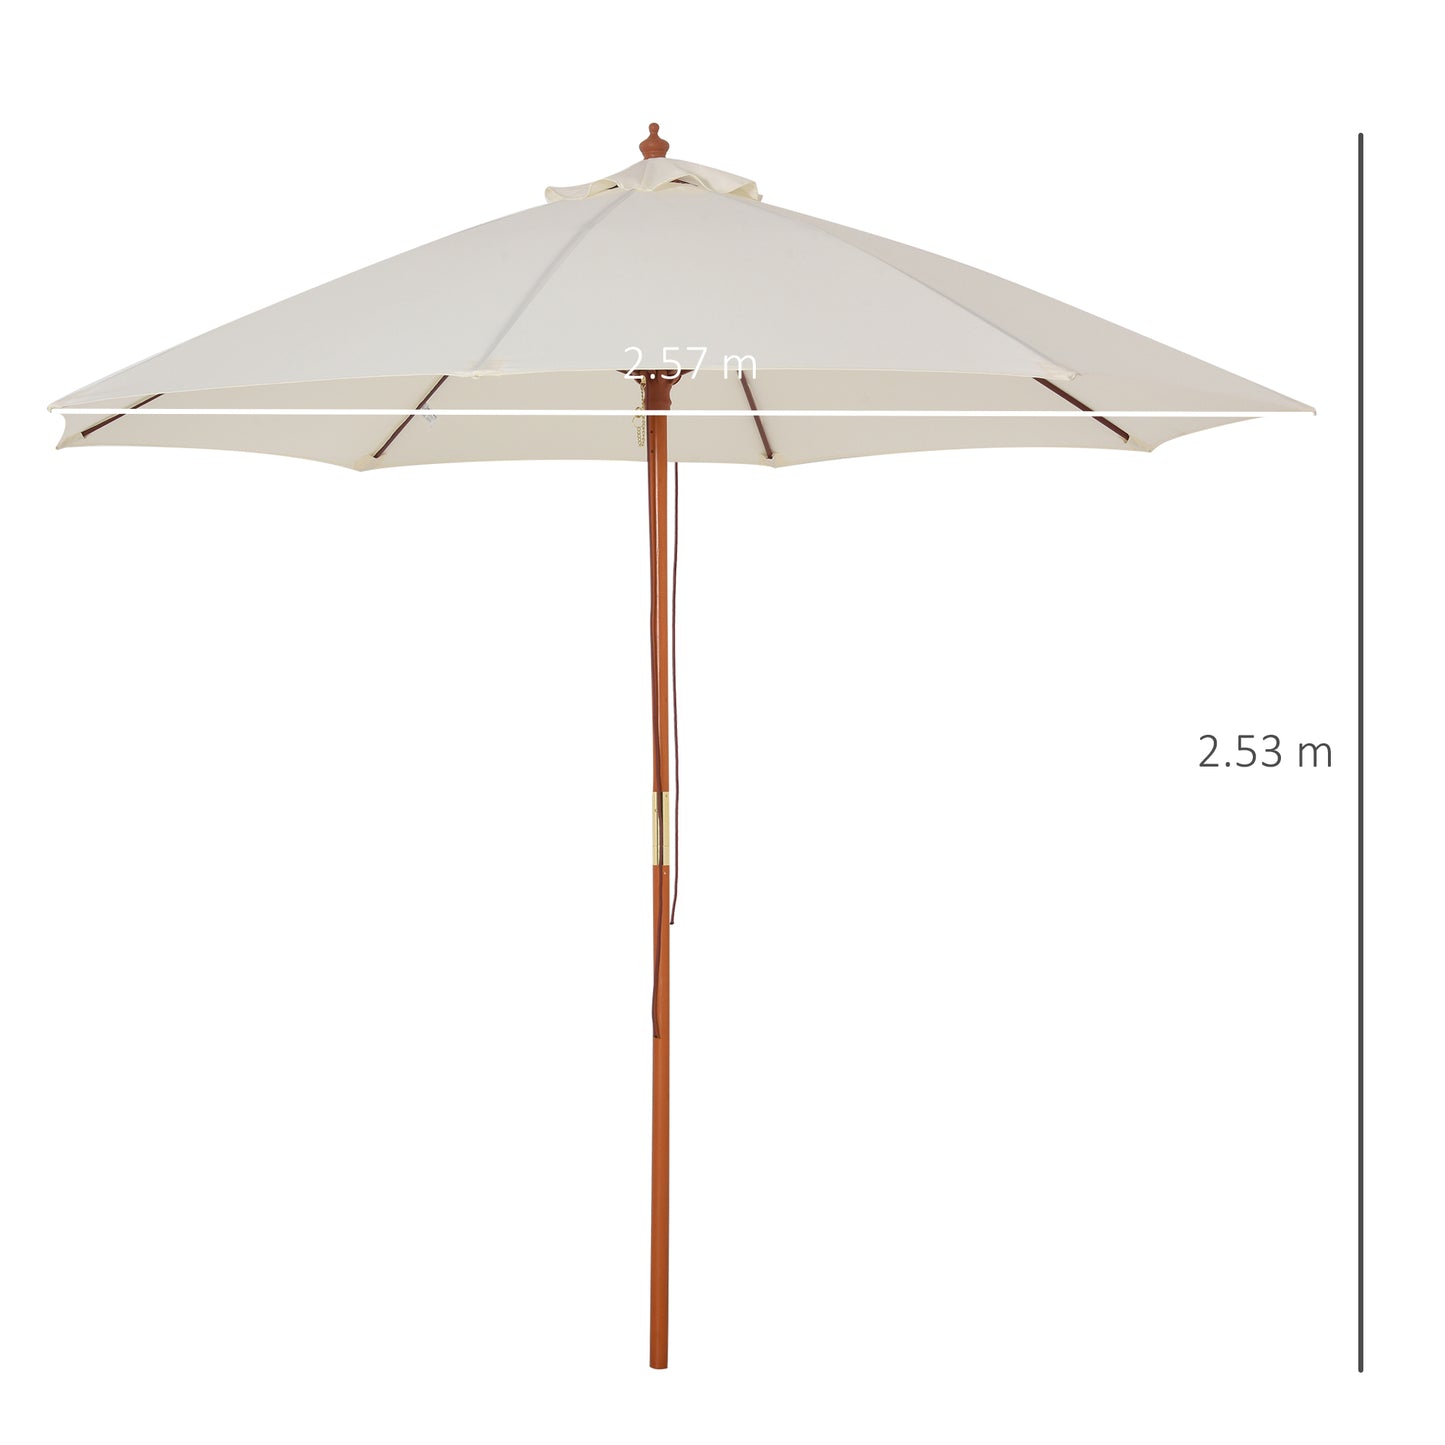 Outsunny 2.5m Wood Garden Parasol Sun Shade Patio Outdoor Market Umbrella Canopy with Top Vent, Cream White w/ Vent